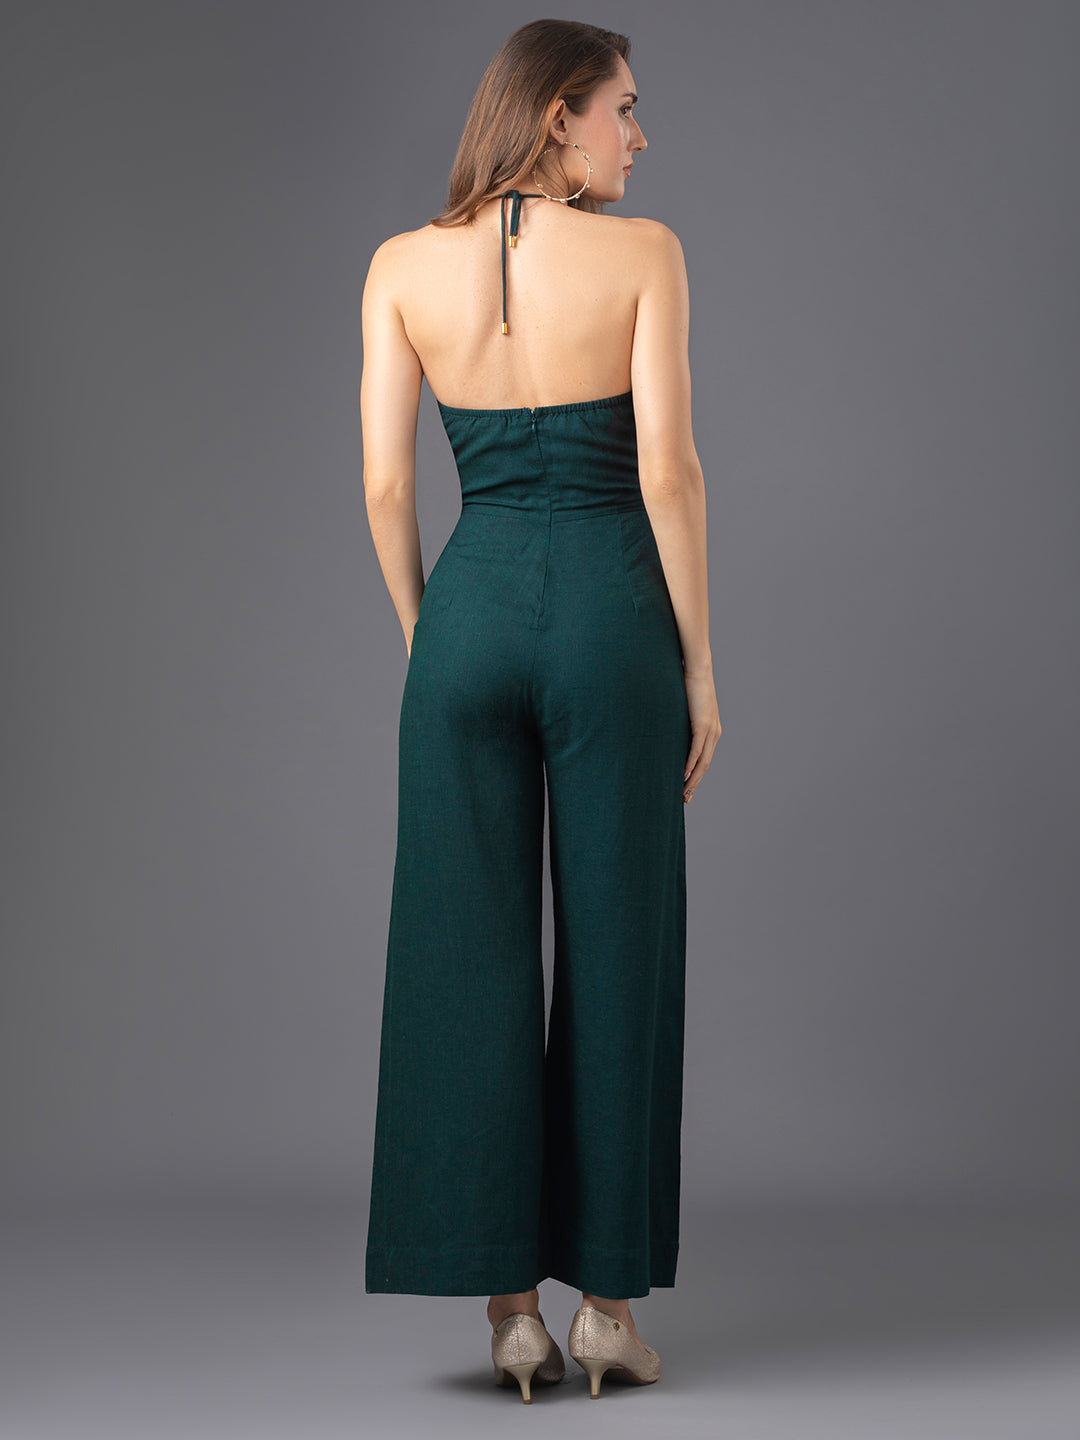 Aria Linen Jumpsuit - Emerald Green